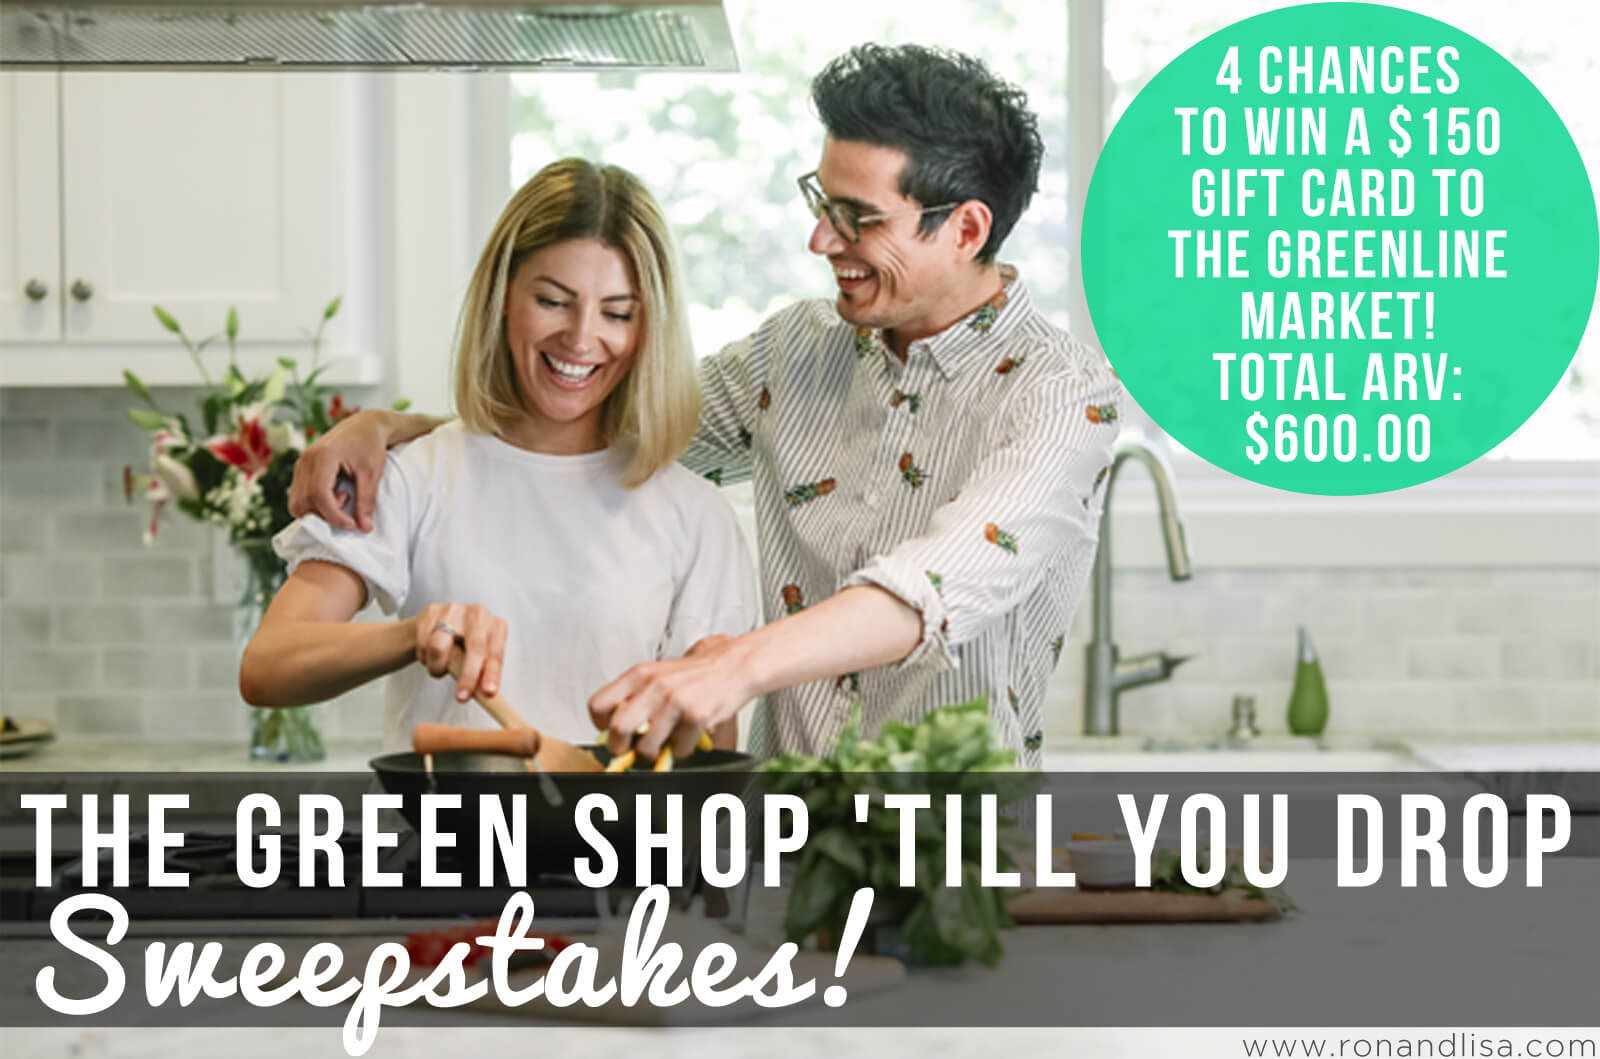 The Green Shop 'Till You Drop Sweepstakes!